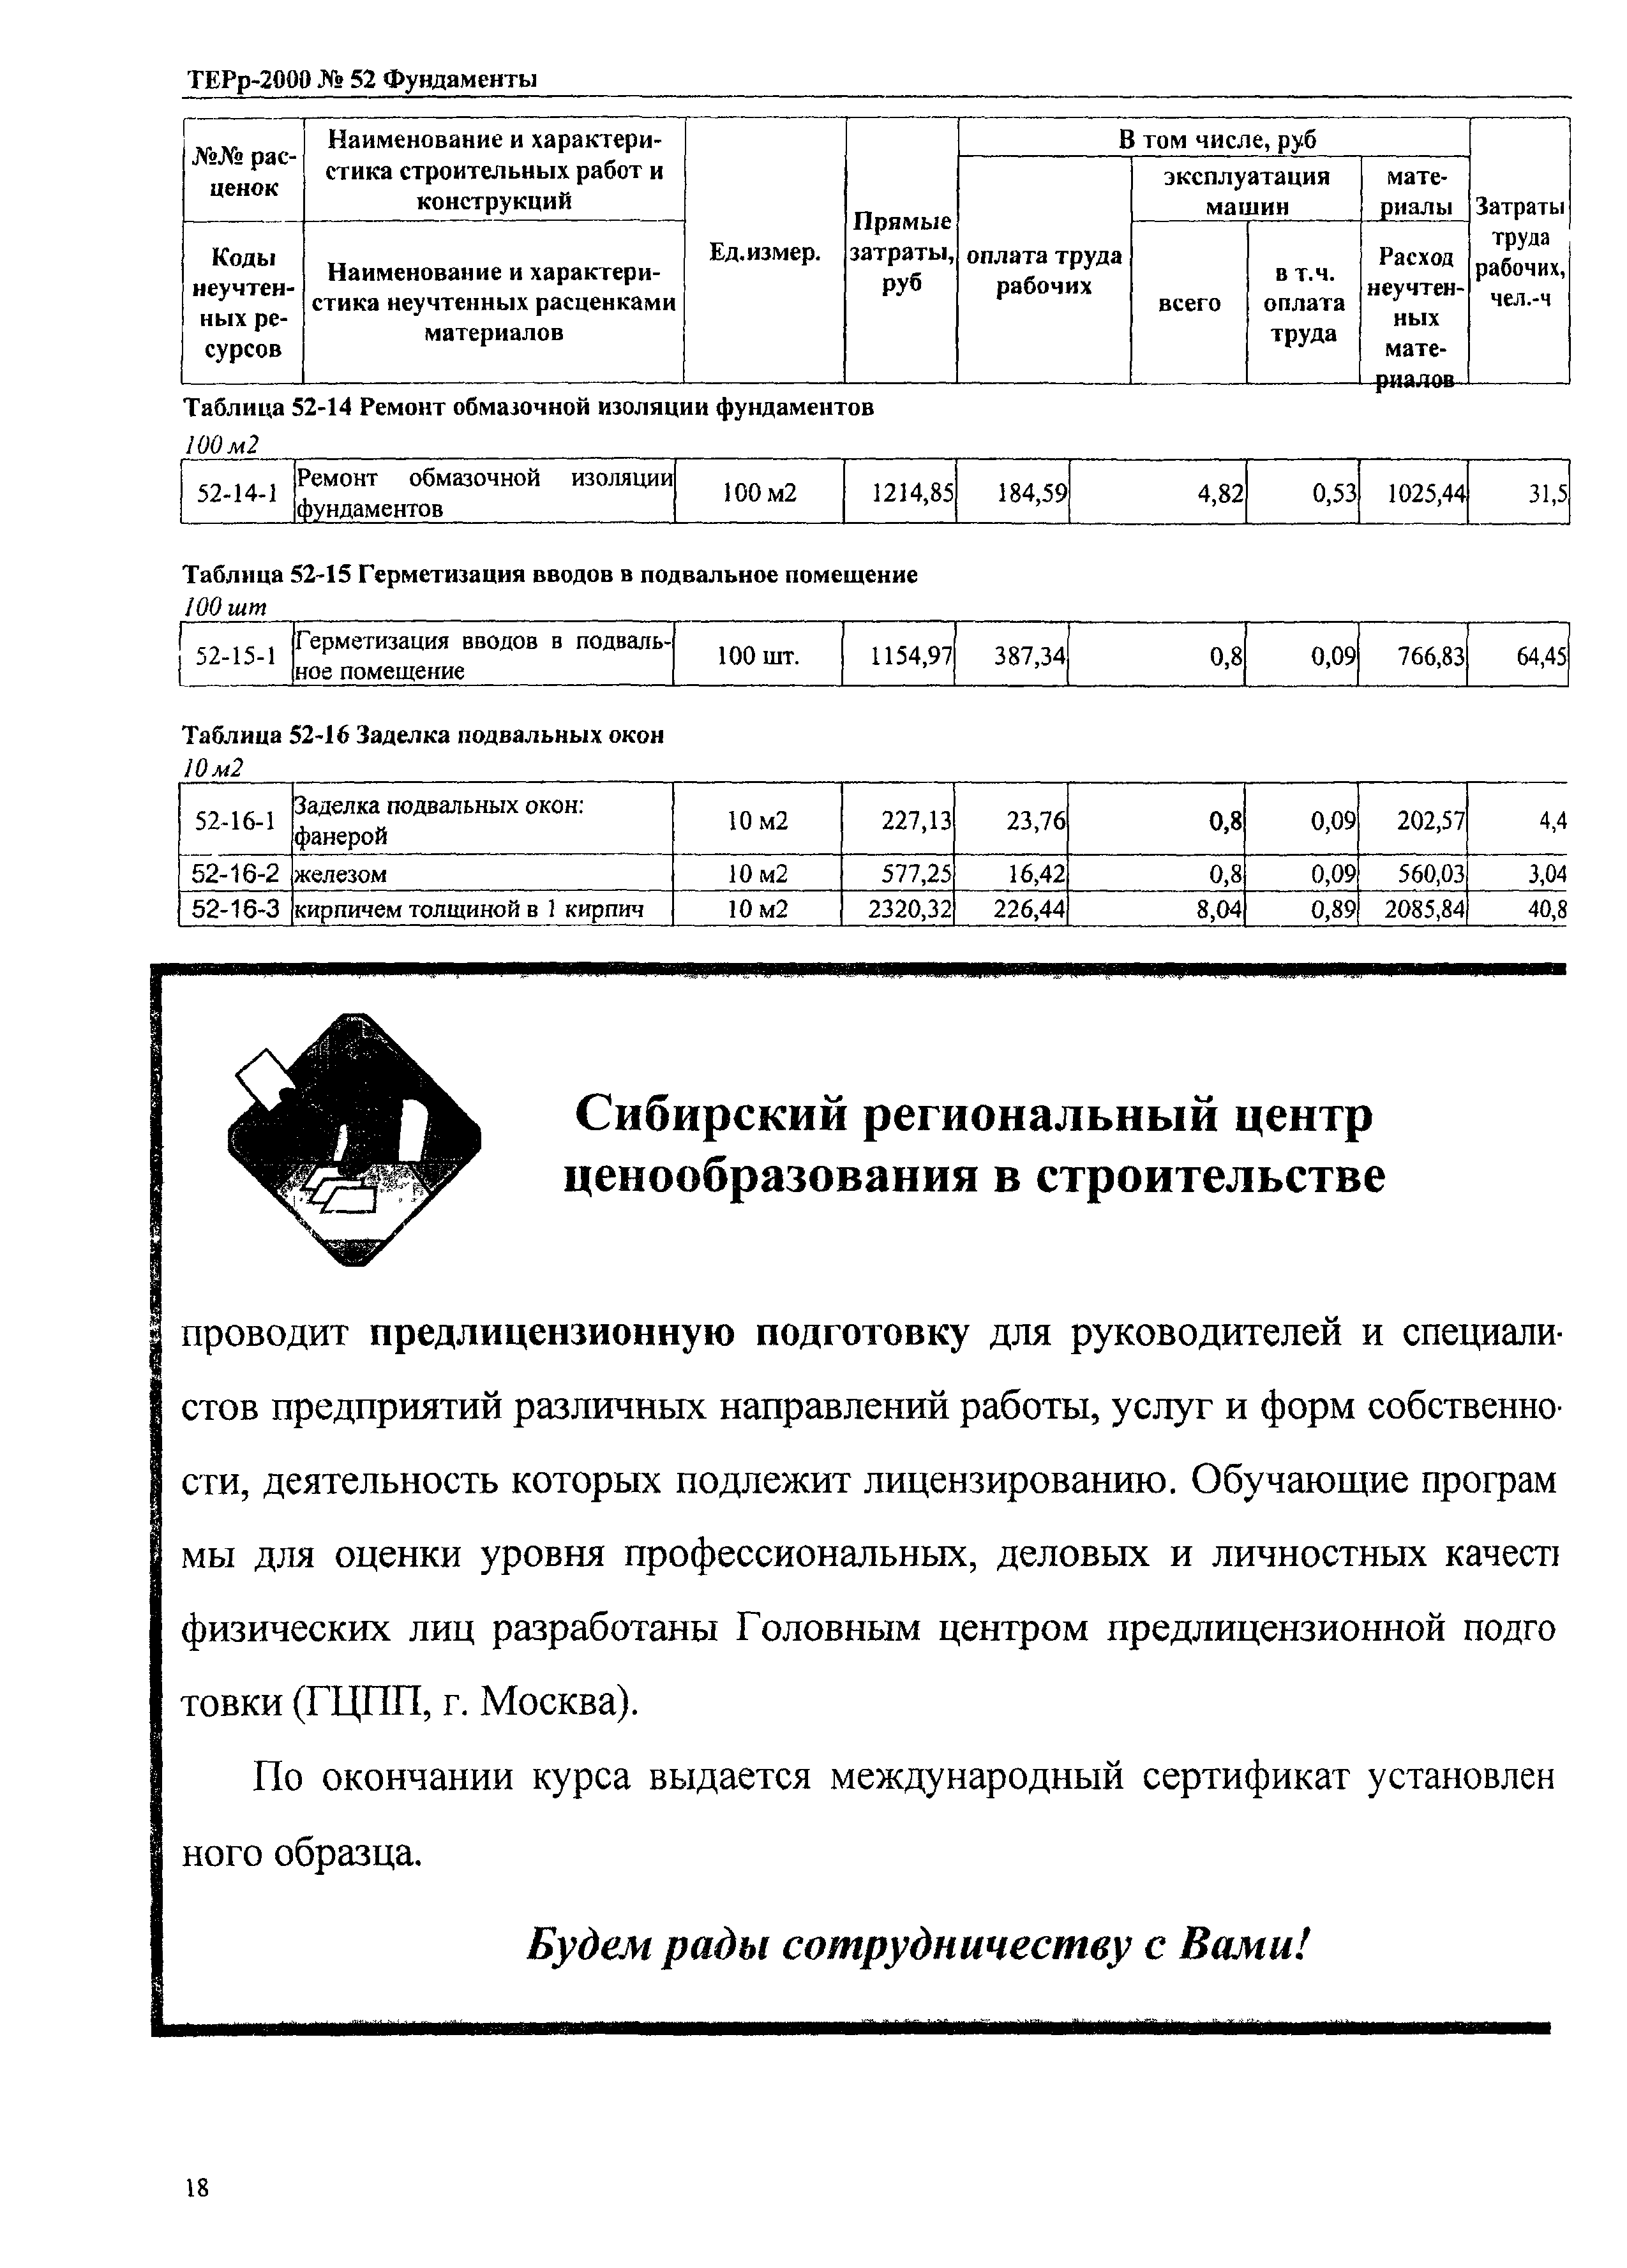 ТЕРр Омской области 2000-52